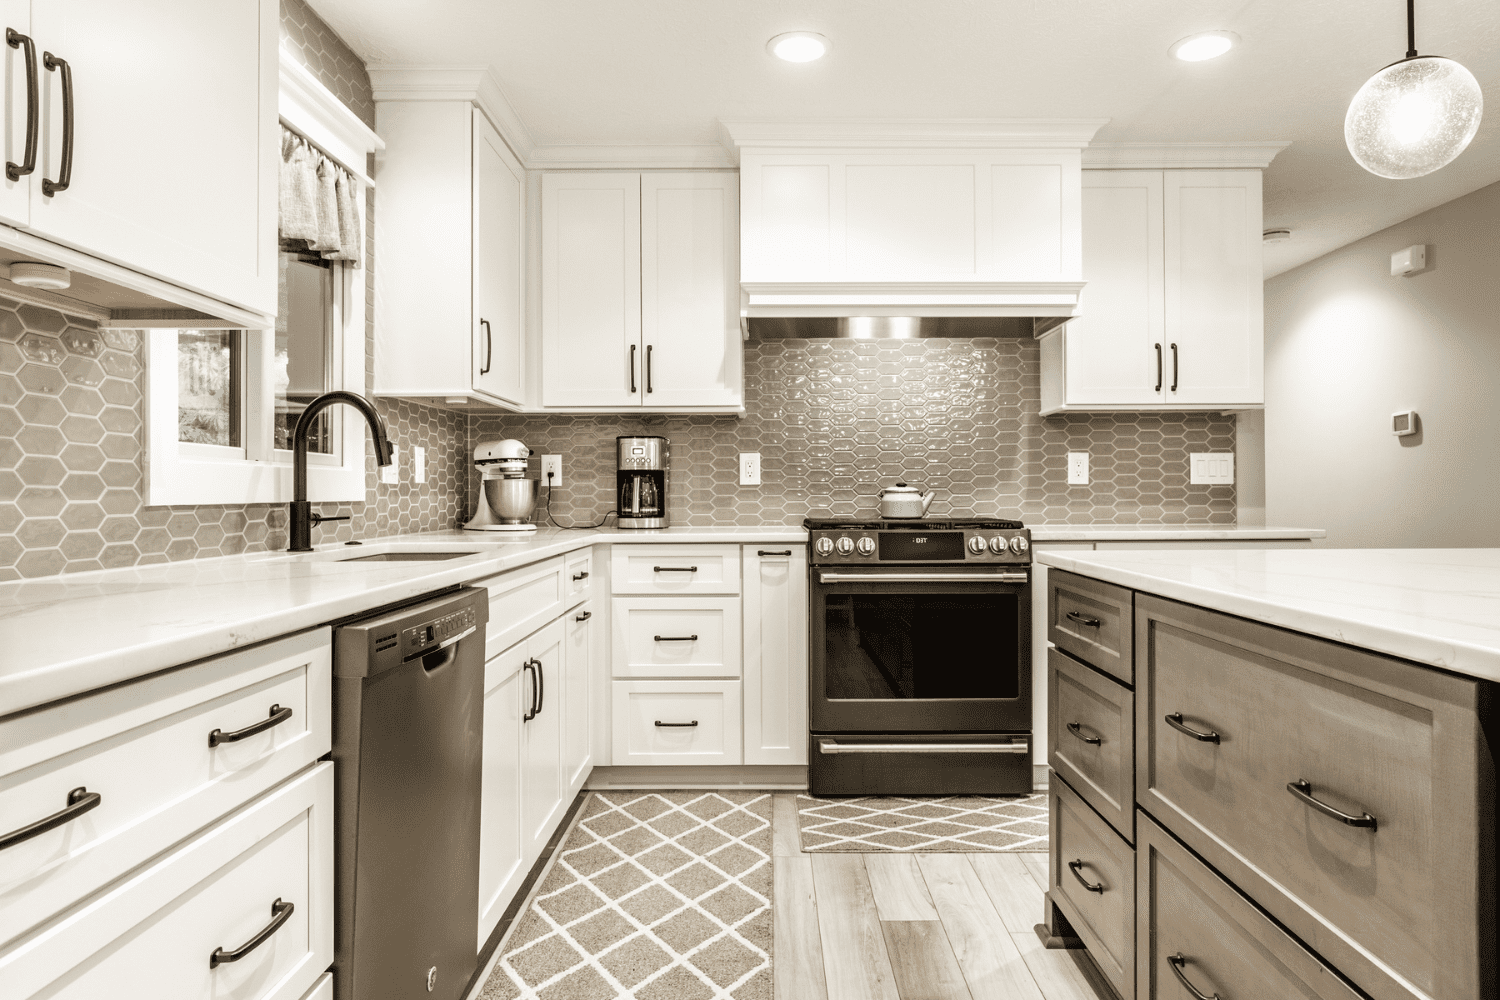 Nicholas Design Build | A neutral kitchen in a black and white photo.
Keywords: neutral kitchen